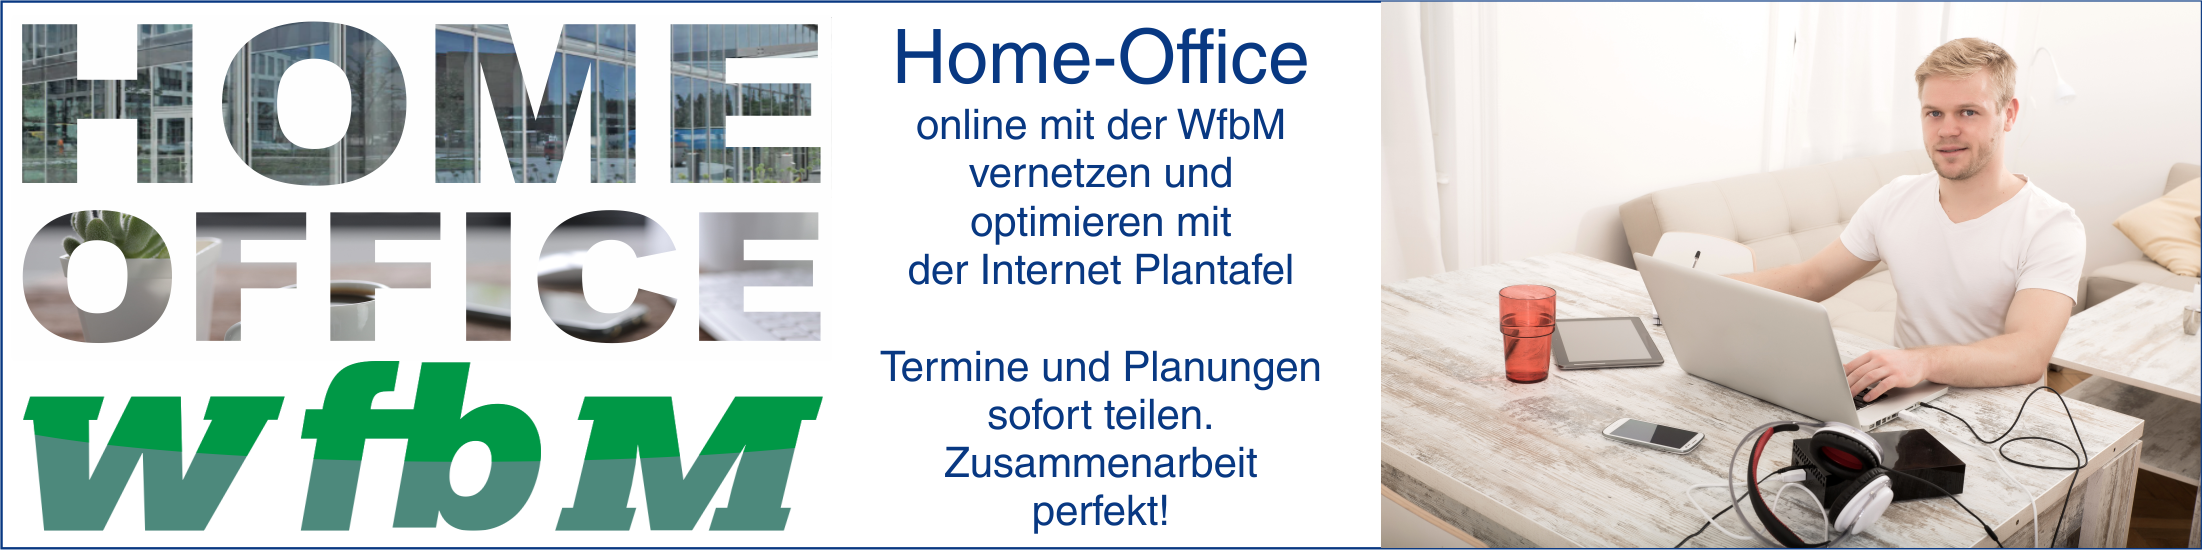 Home Office WfbM